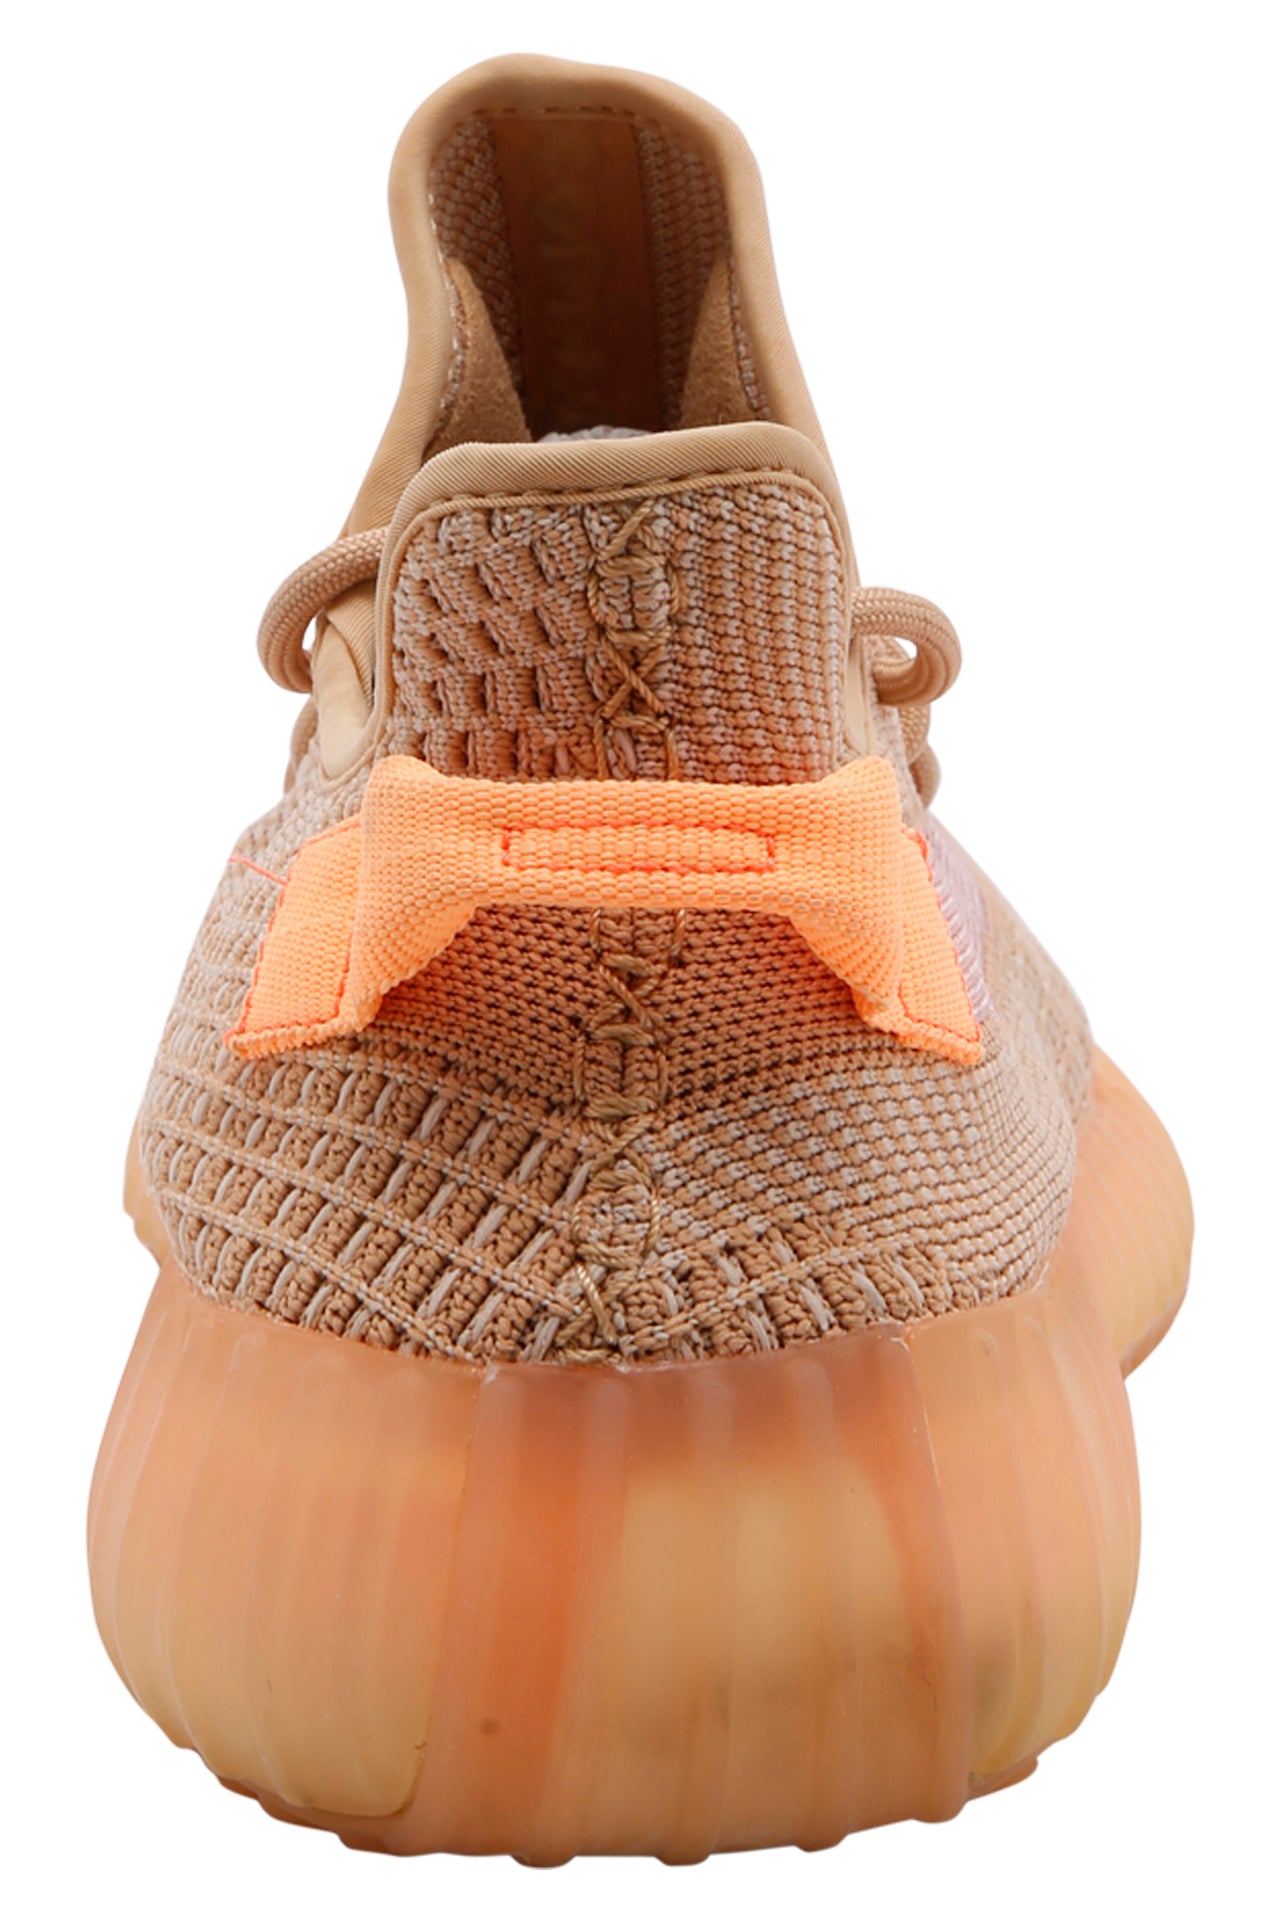 Yeezy X Adidas Boost Sneakers Orange Size EU 44.5